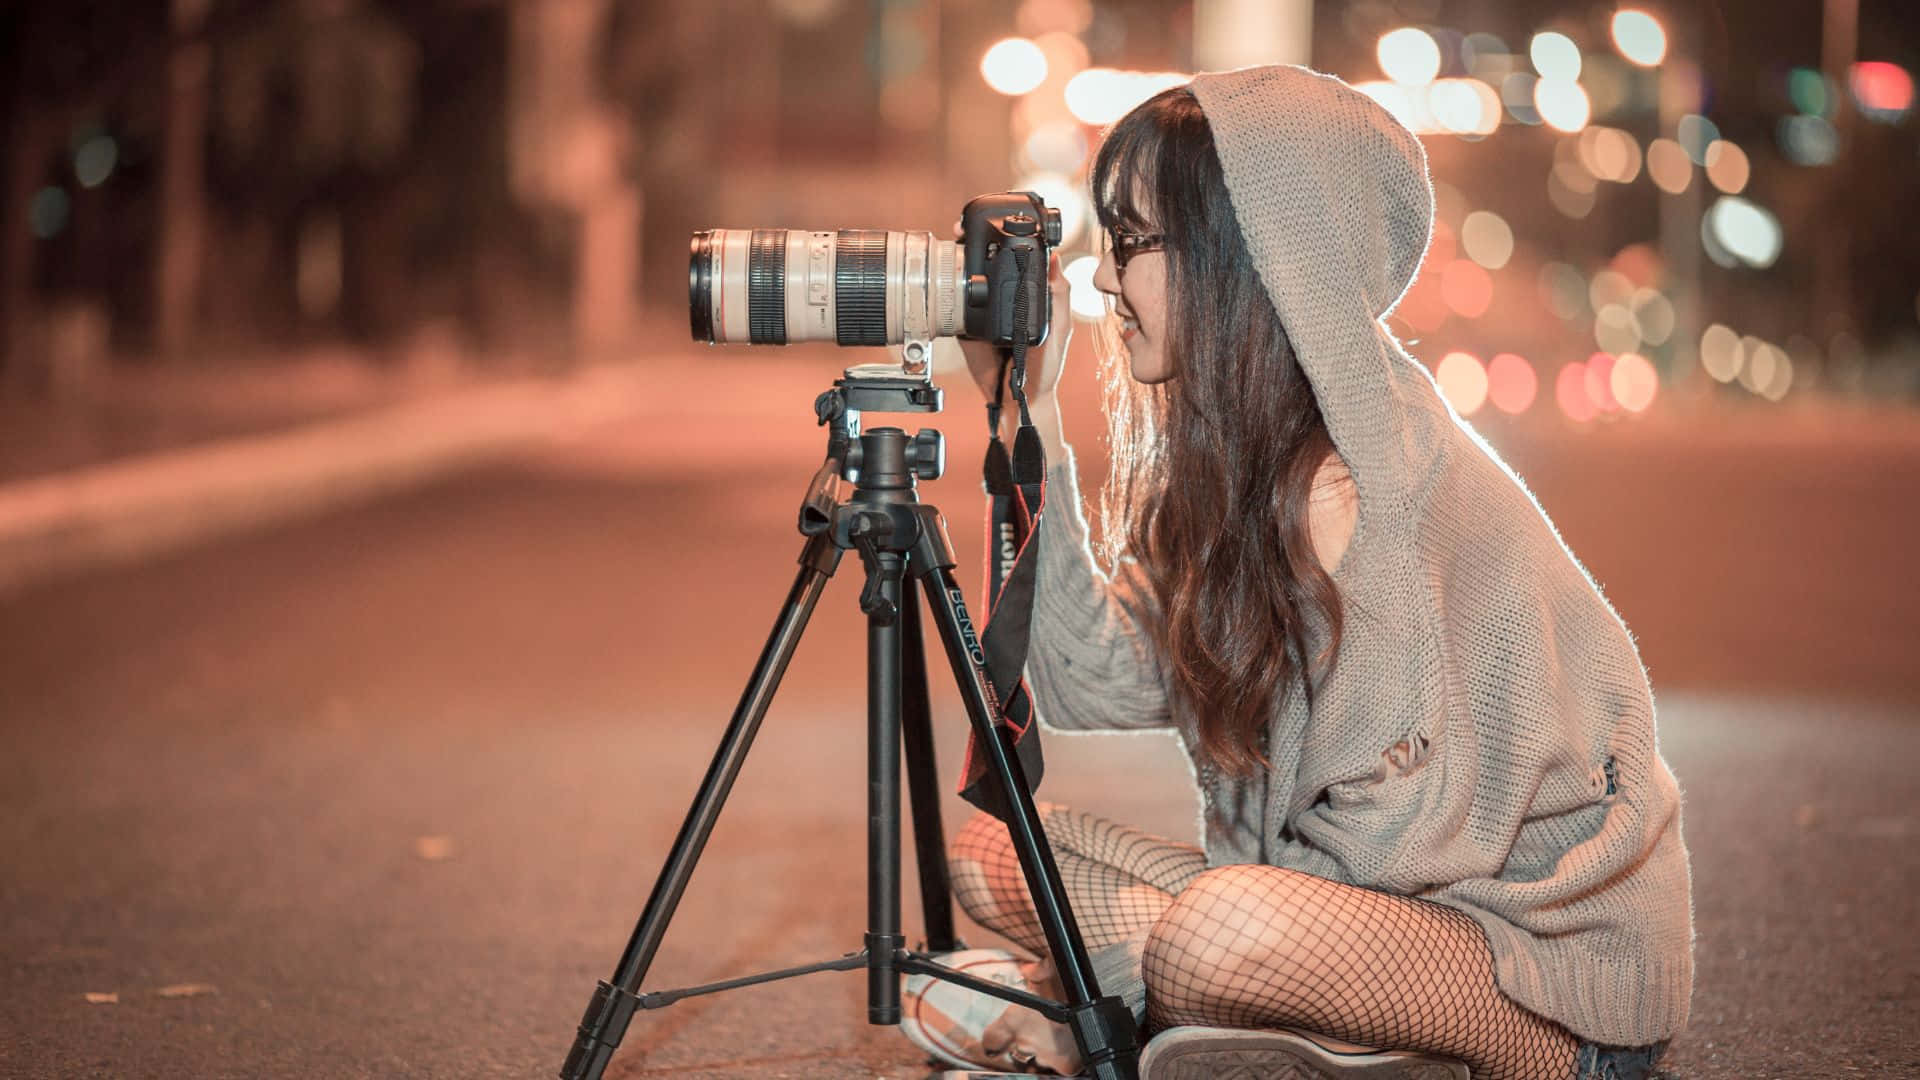 Capturing Beauty Through The Lens